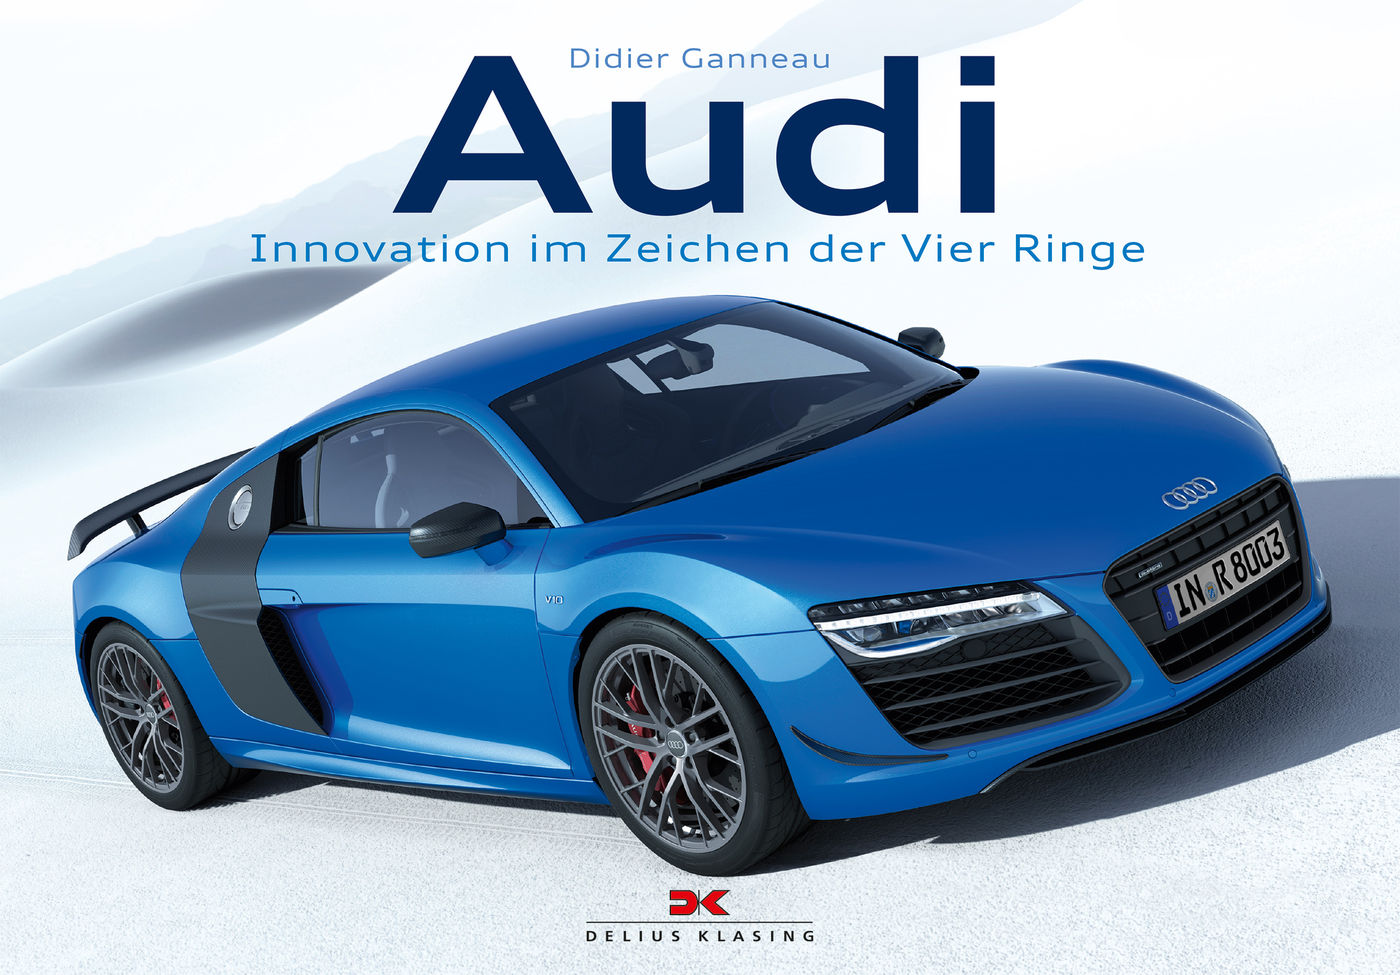 Audi
Audi
Audi